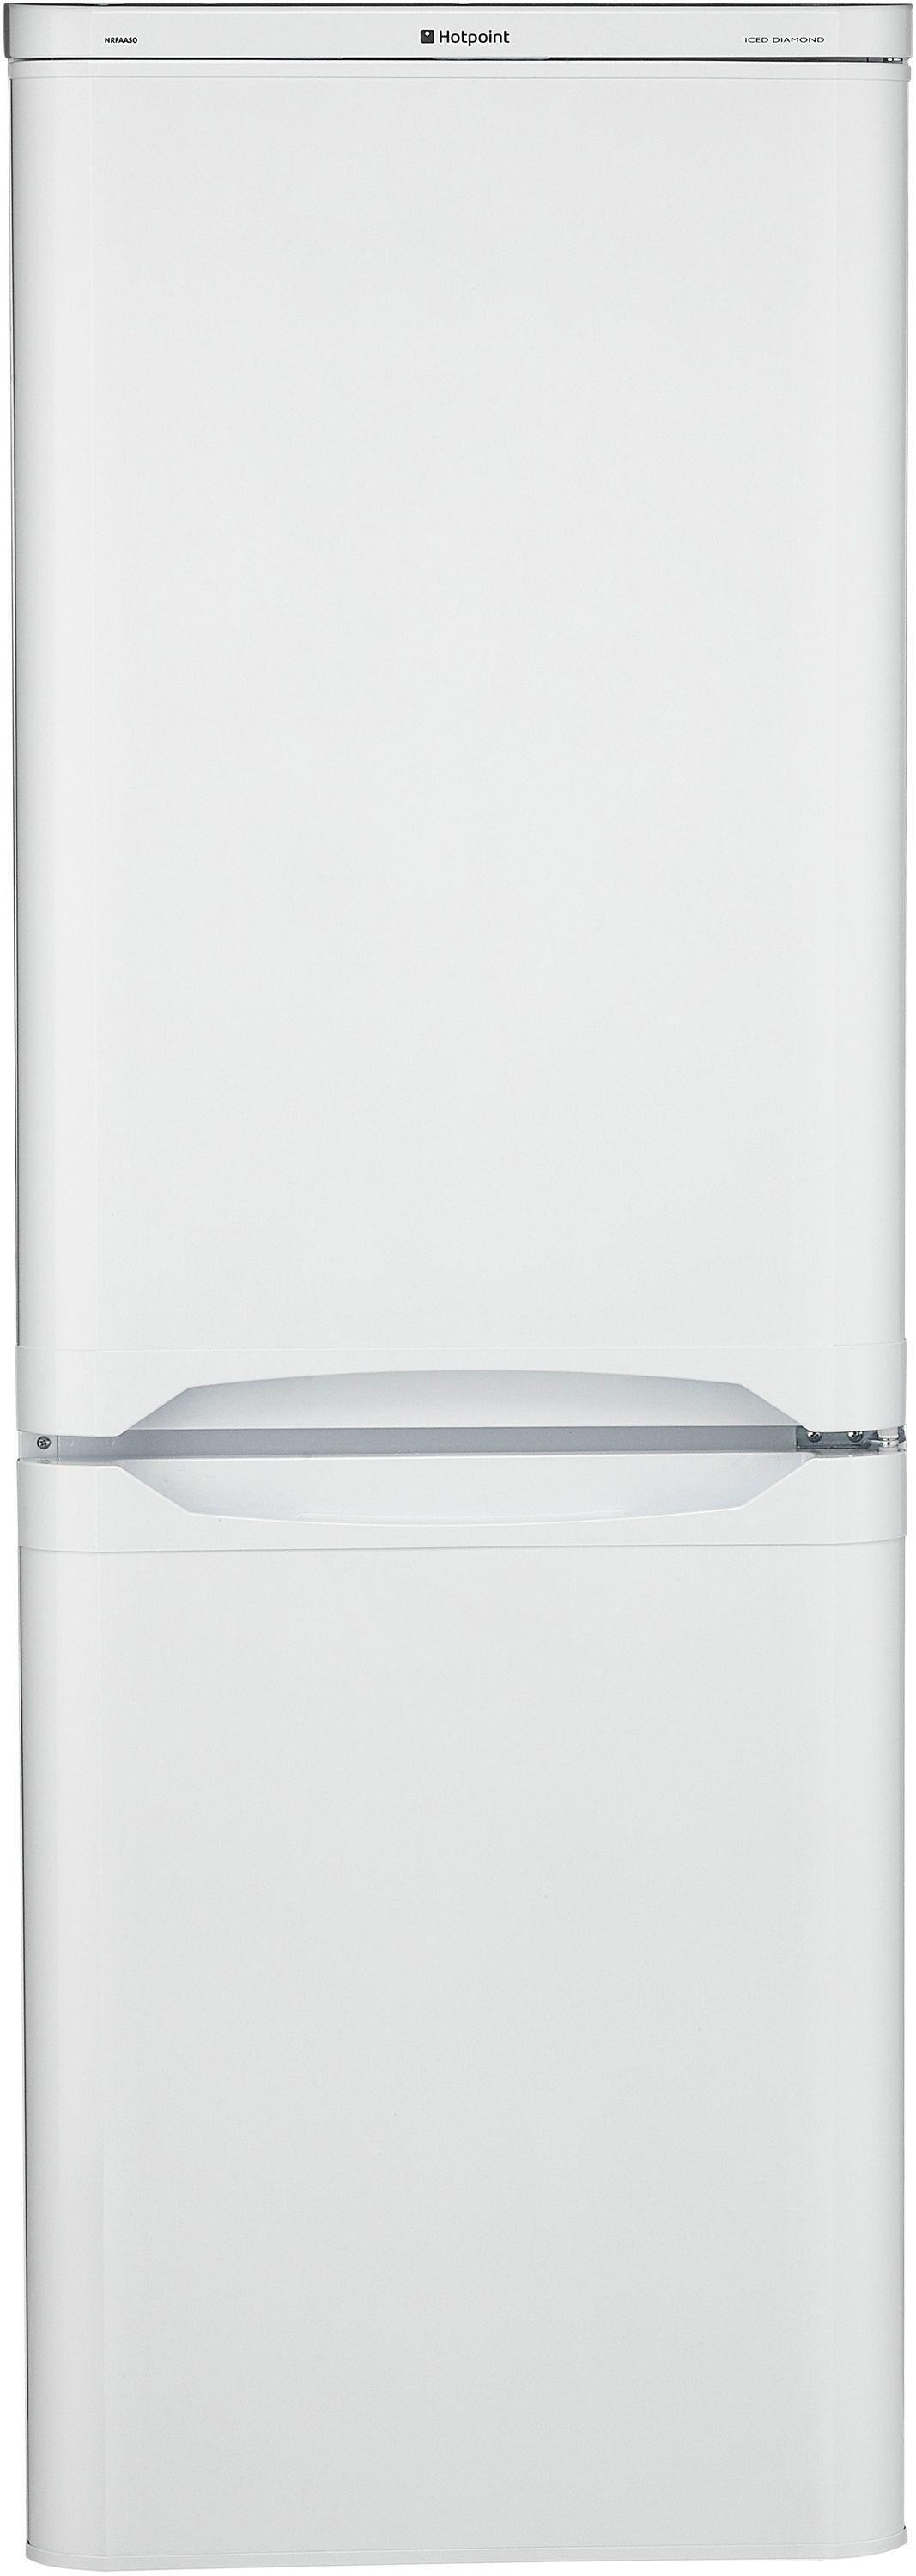 Hotpoint First Edition NRFAA50P Fridge Freezer - White